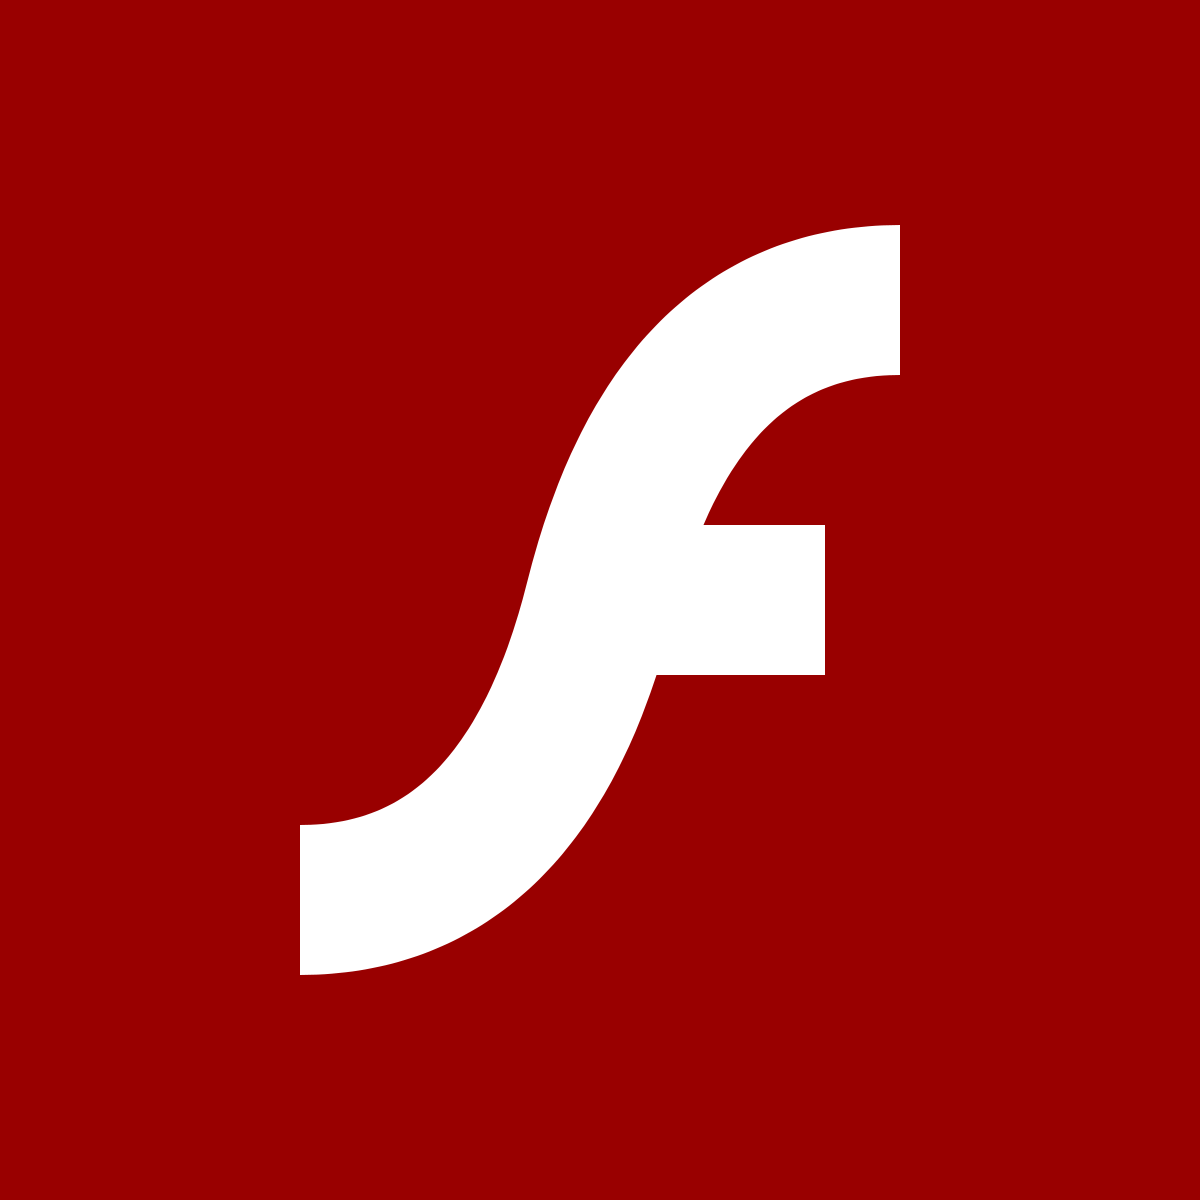 Flash 10 demo